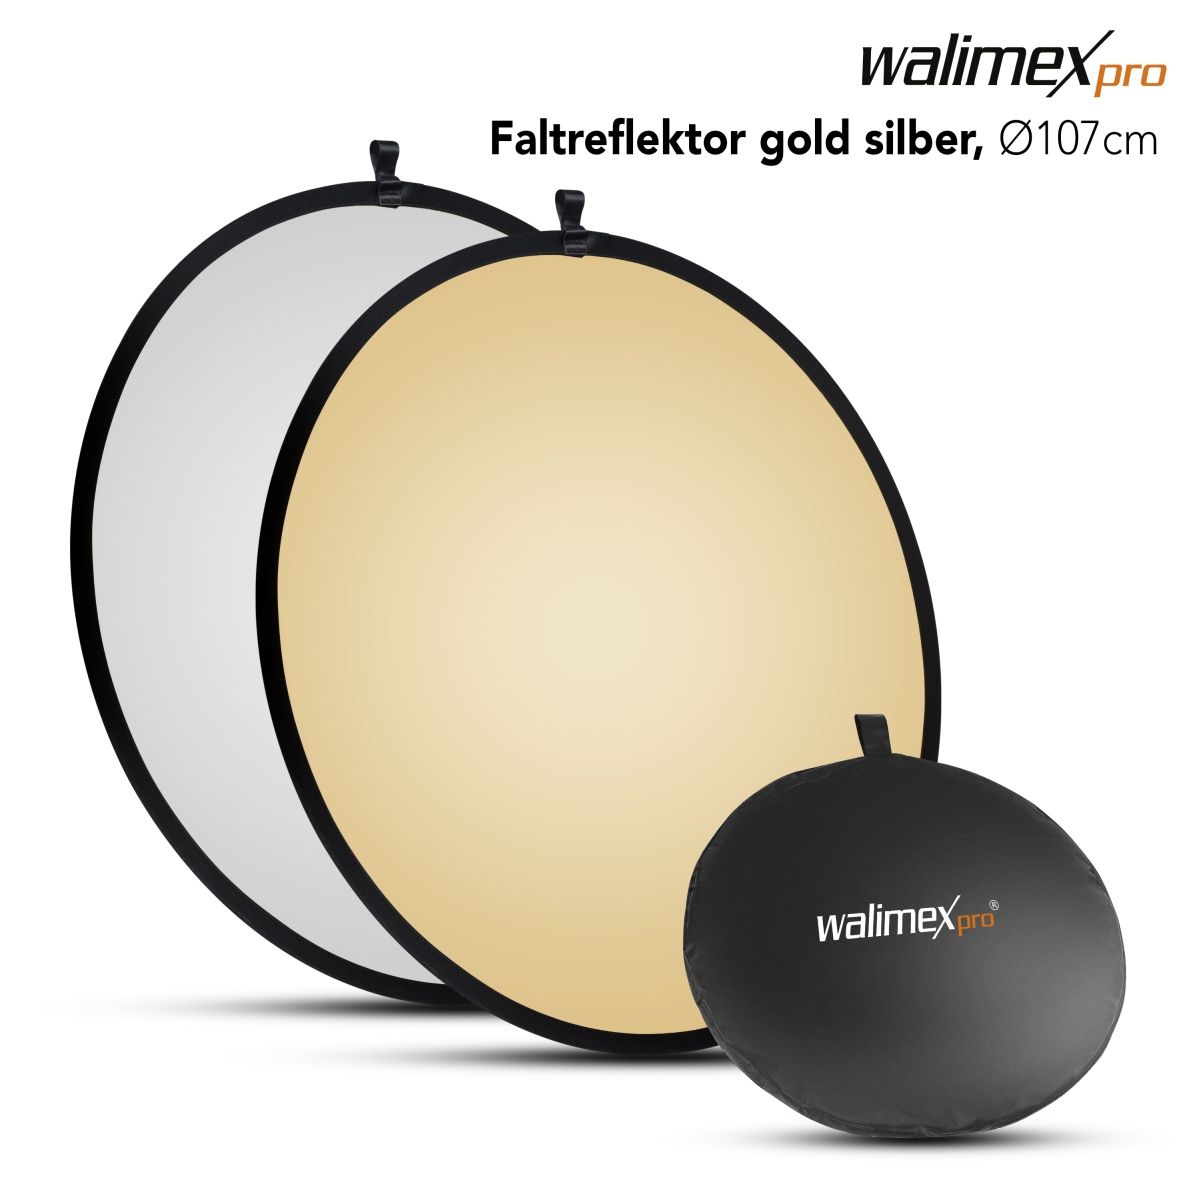 Walimex pro Daylight 250S Impression XL